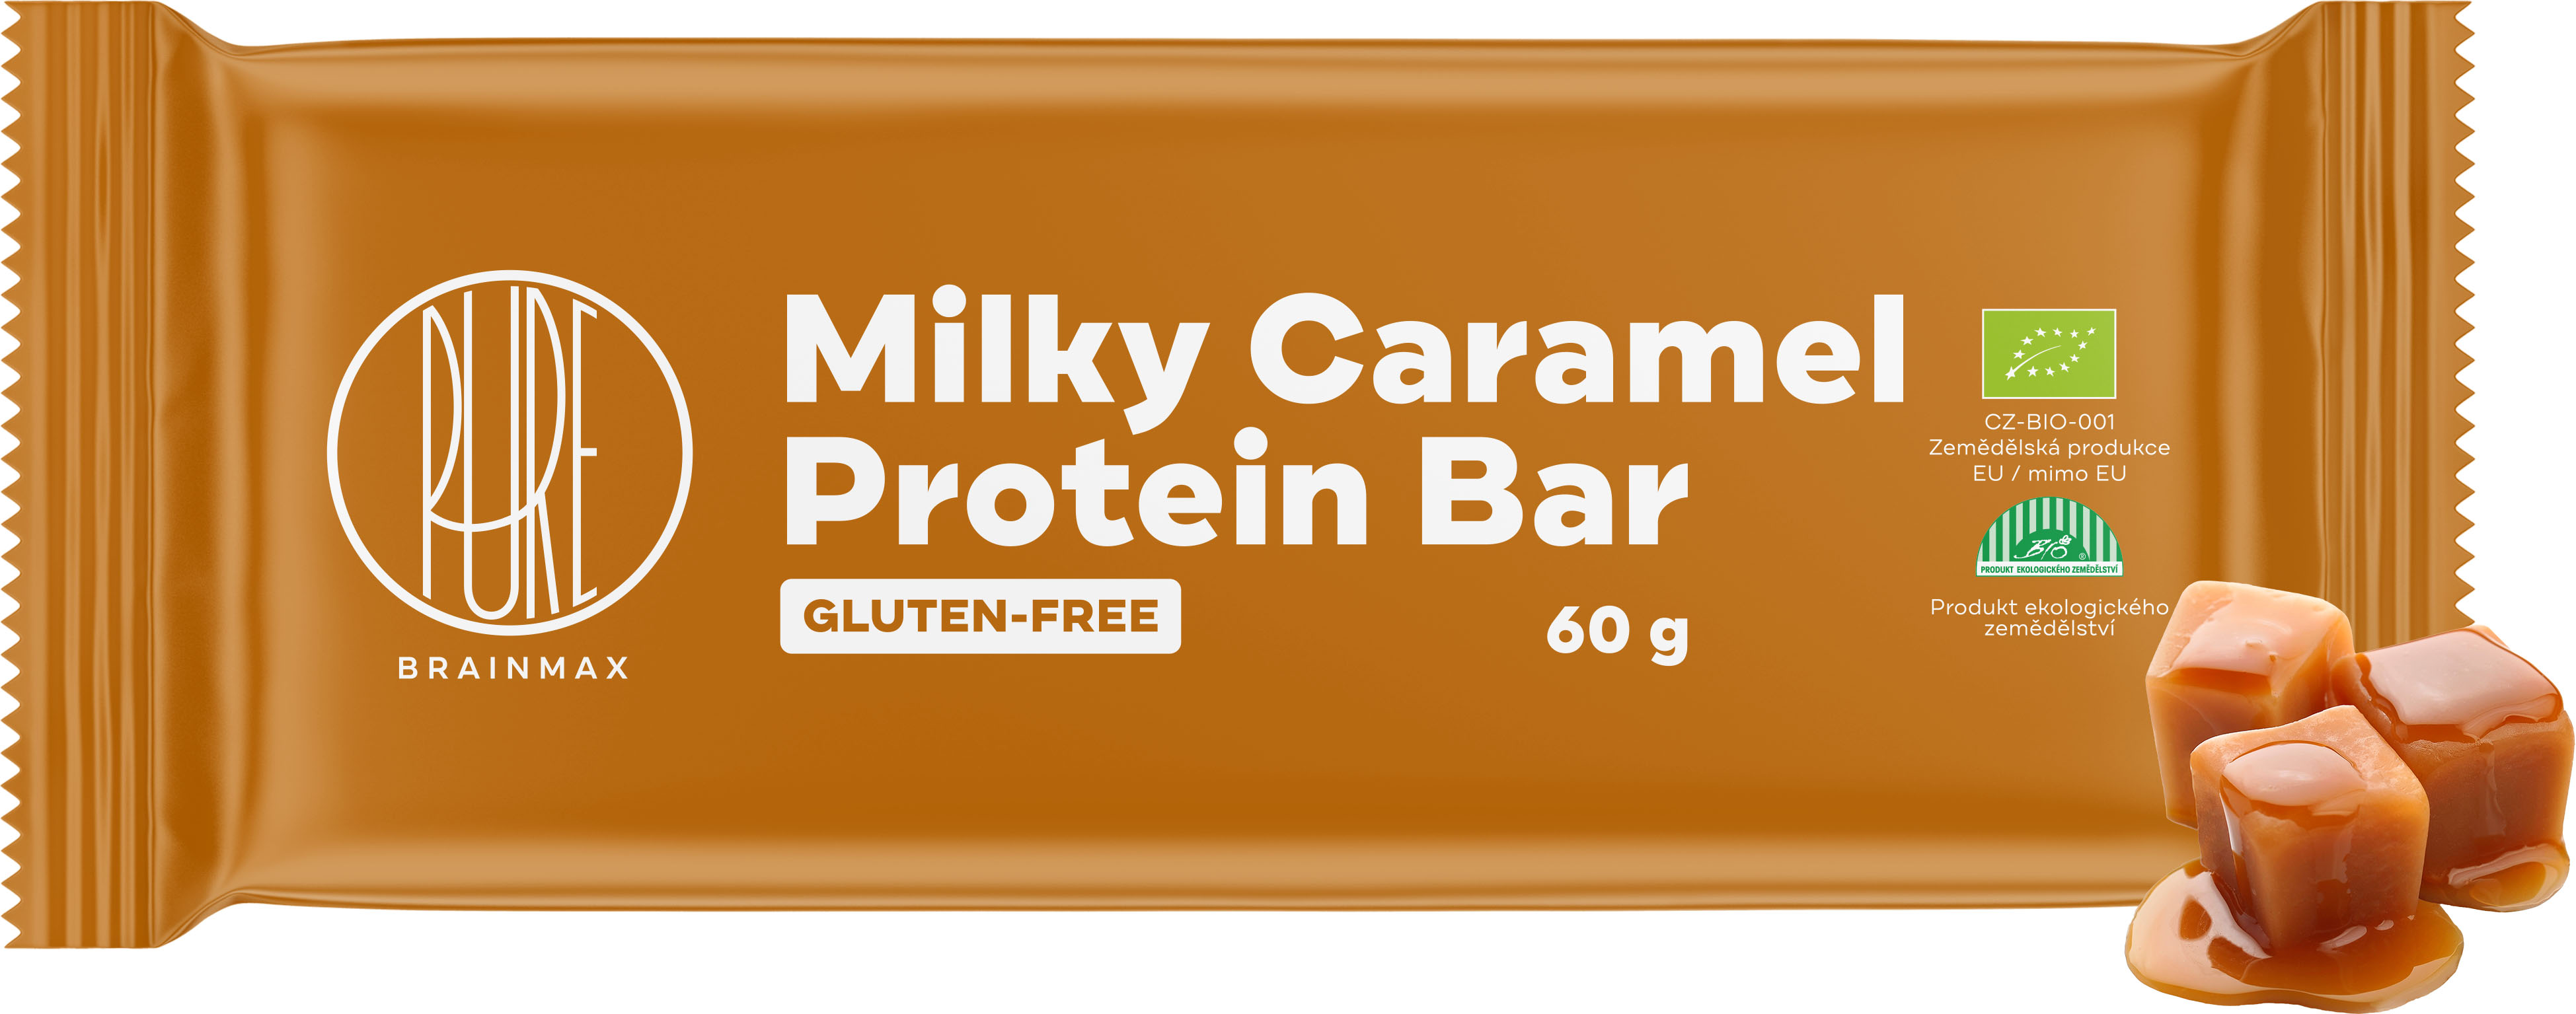 BrainMax Pure Milky Caramel Protein Bar, Proteinová tyčinka, Mléčný karamel, BIO, 60 g *CZ-BIO-001 certifikát / Protein Bar Milky Caramel